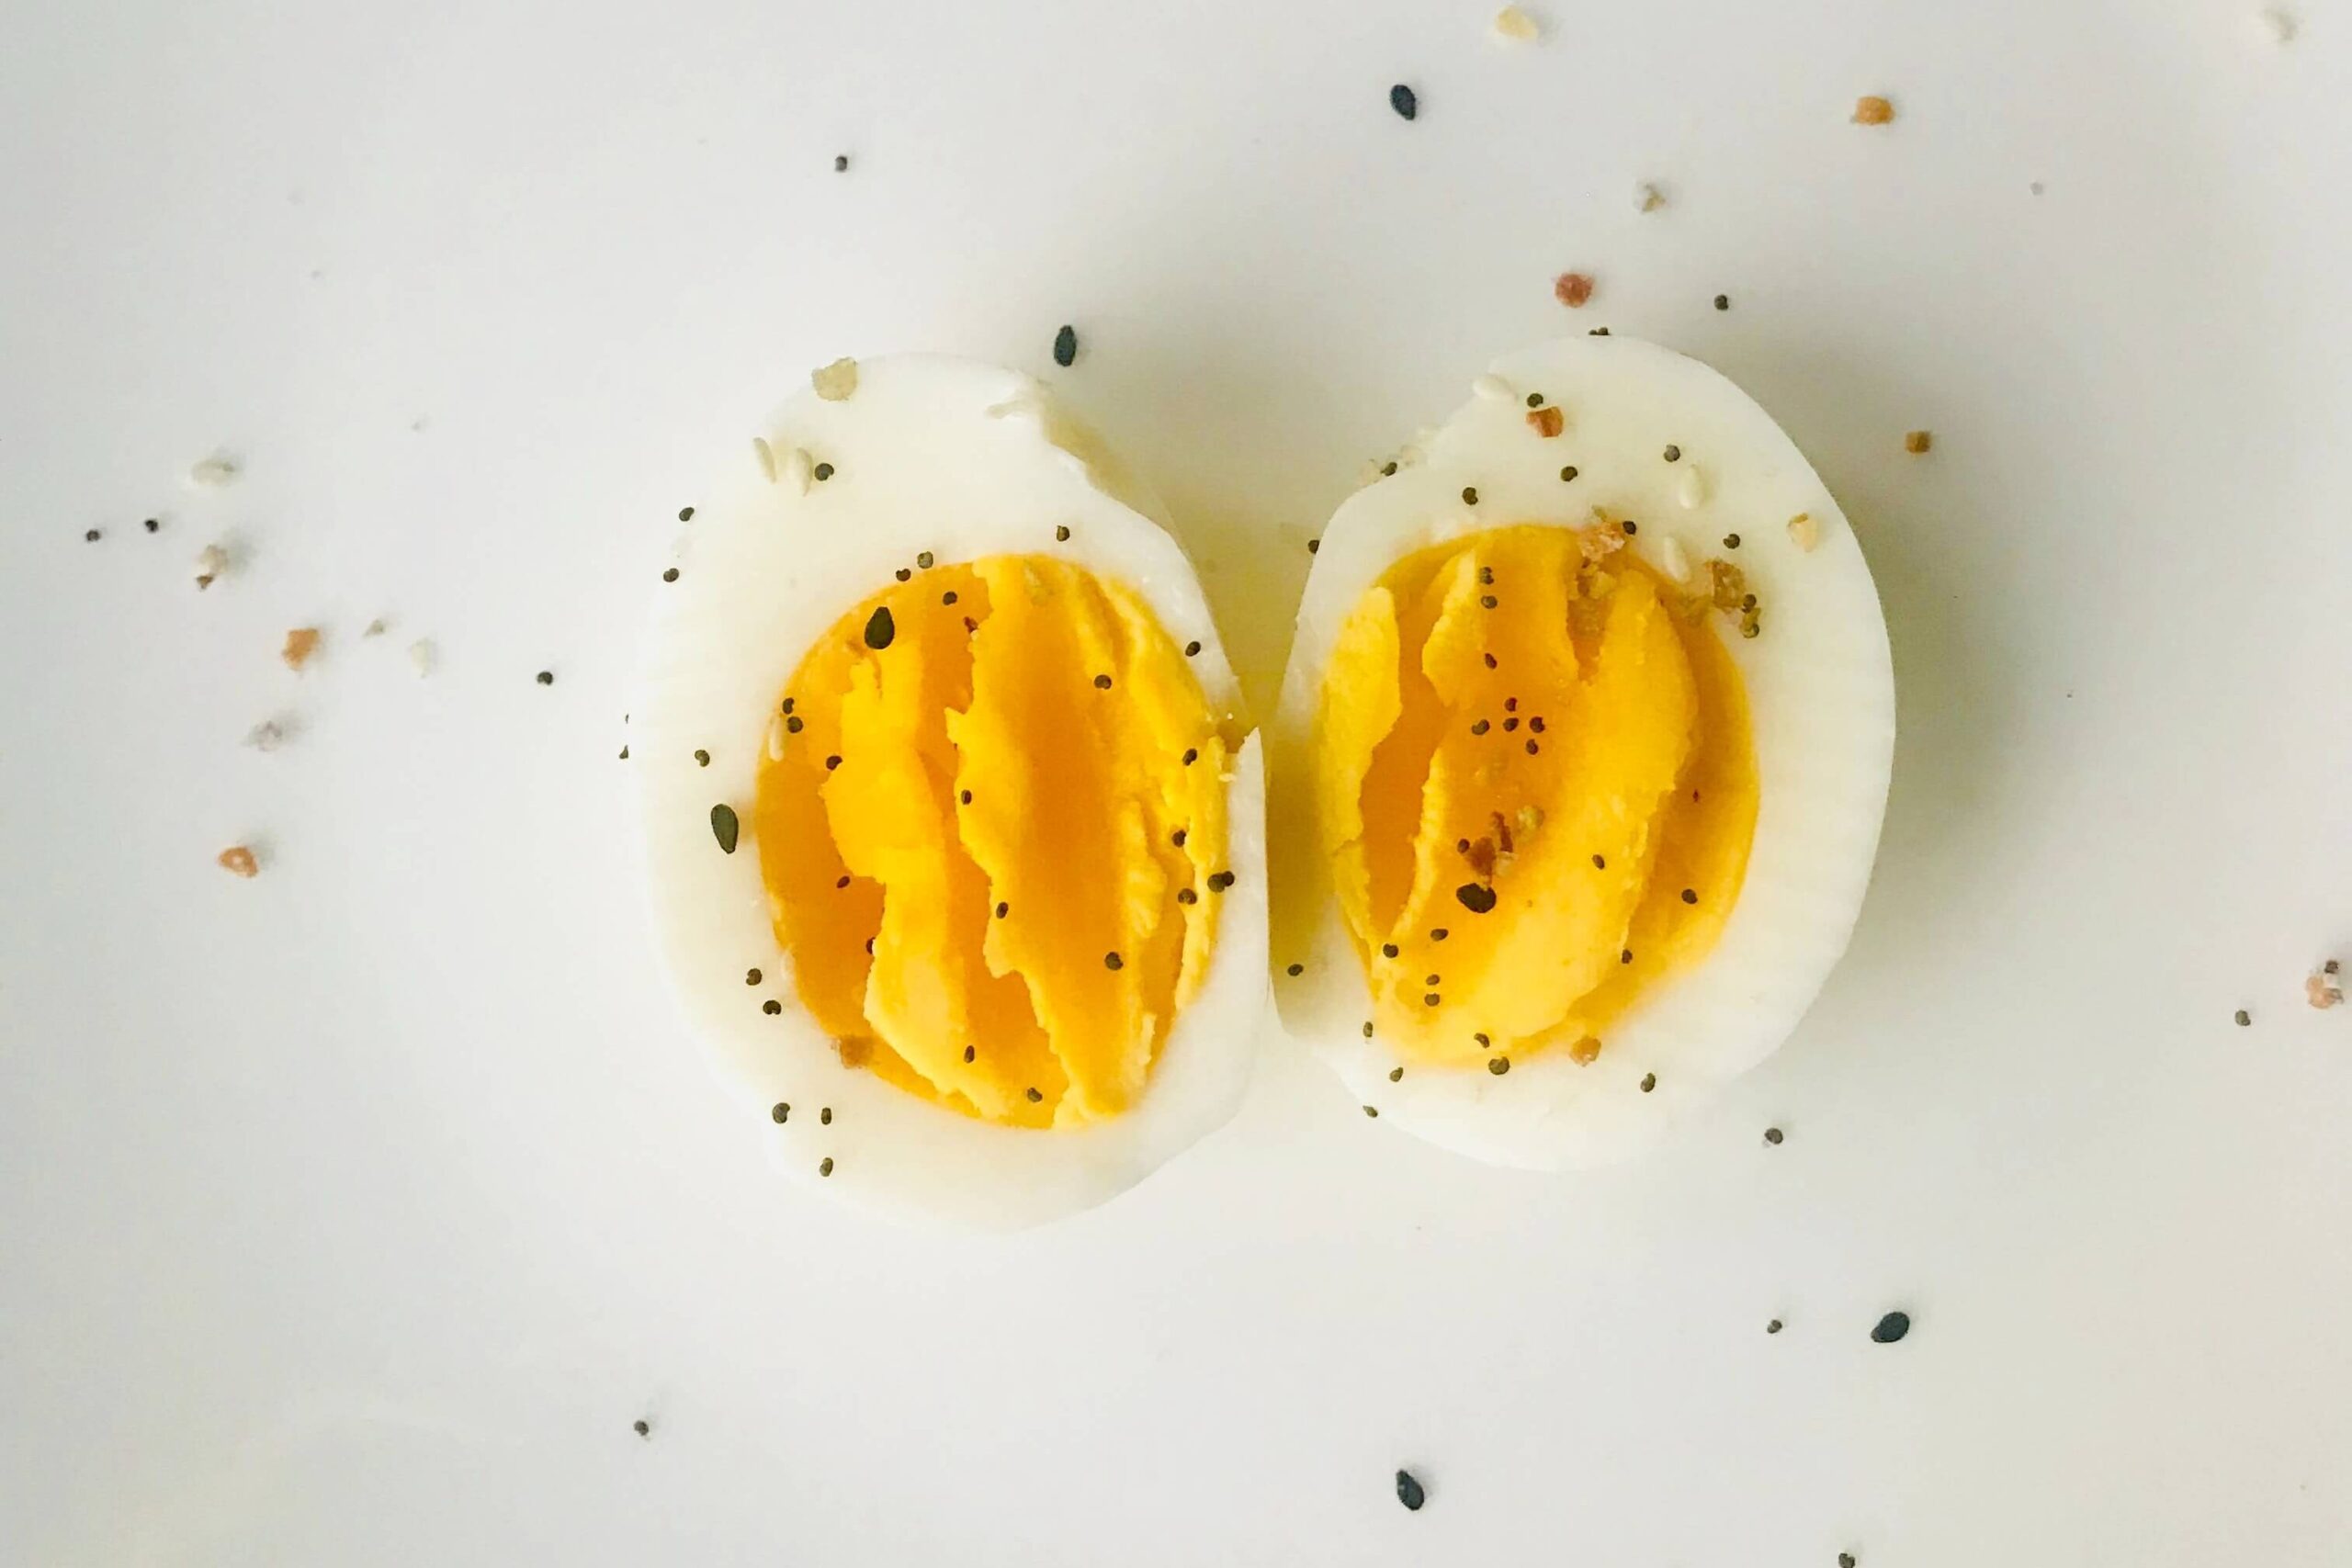 Eggs a healthy diet food